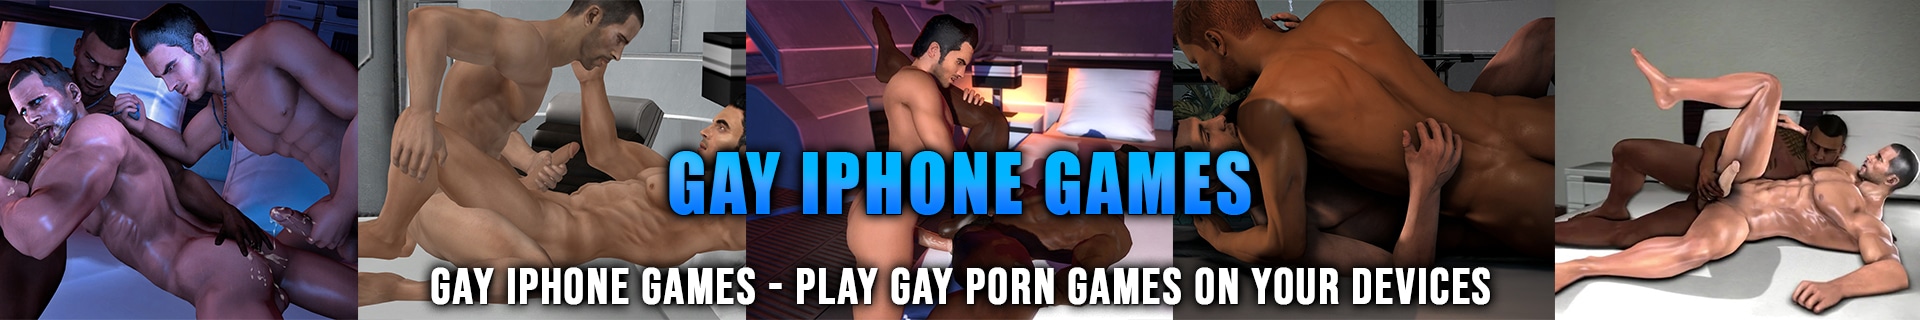 Porn games iphone Hard core domination porn